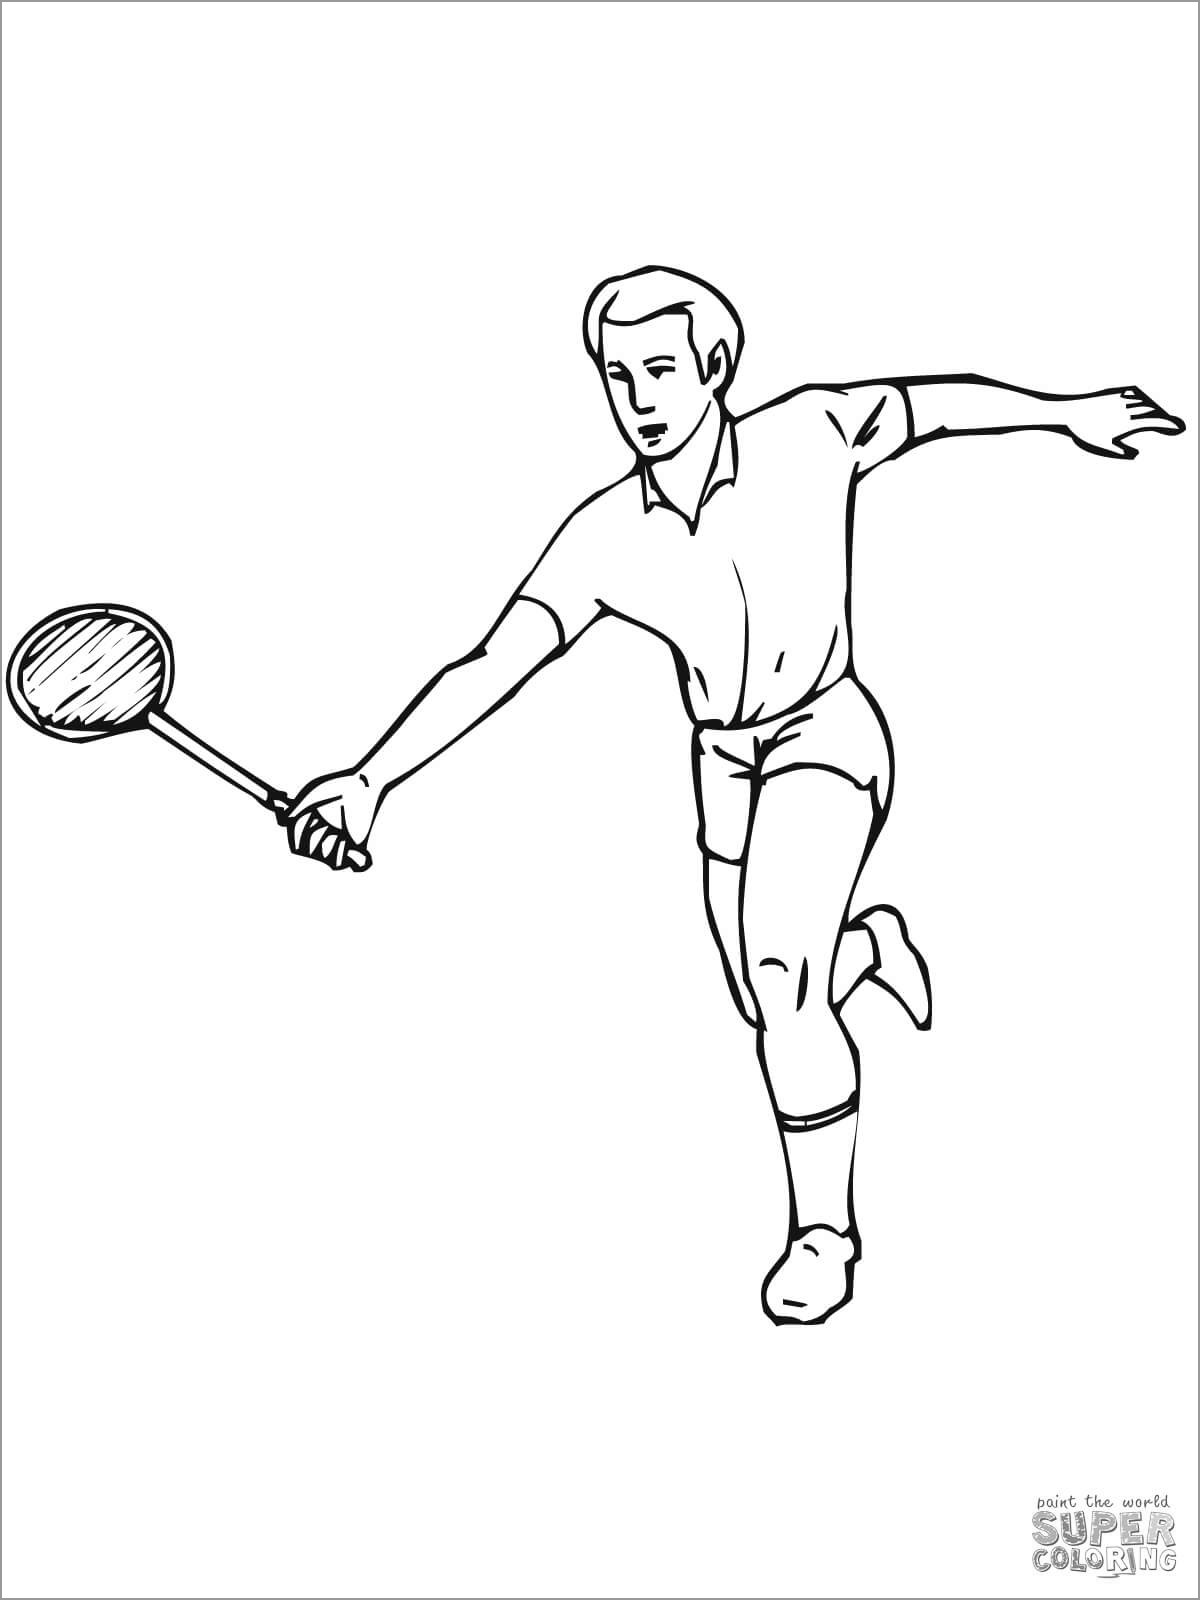 Coloring Page Of Badminton